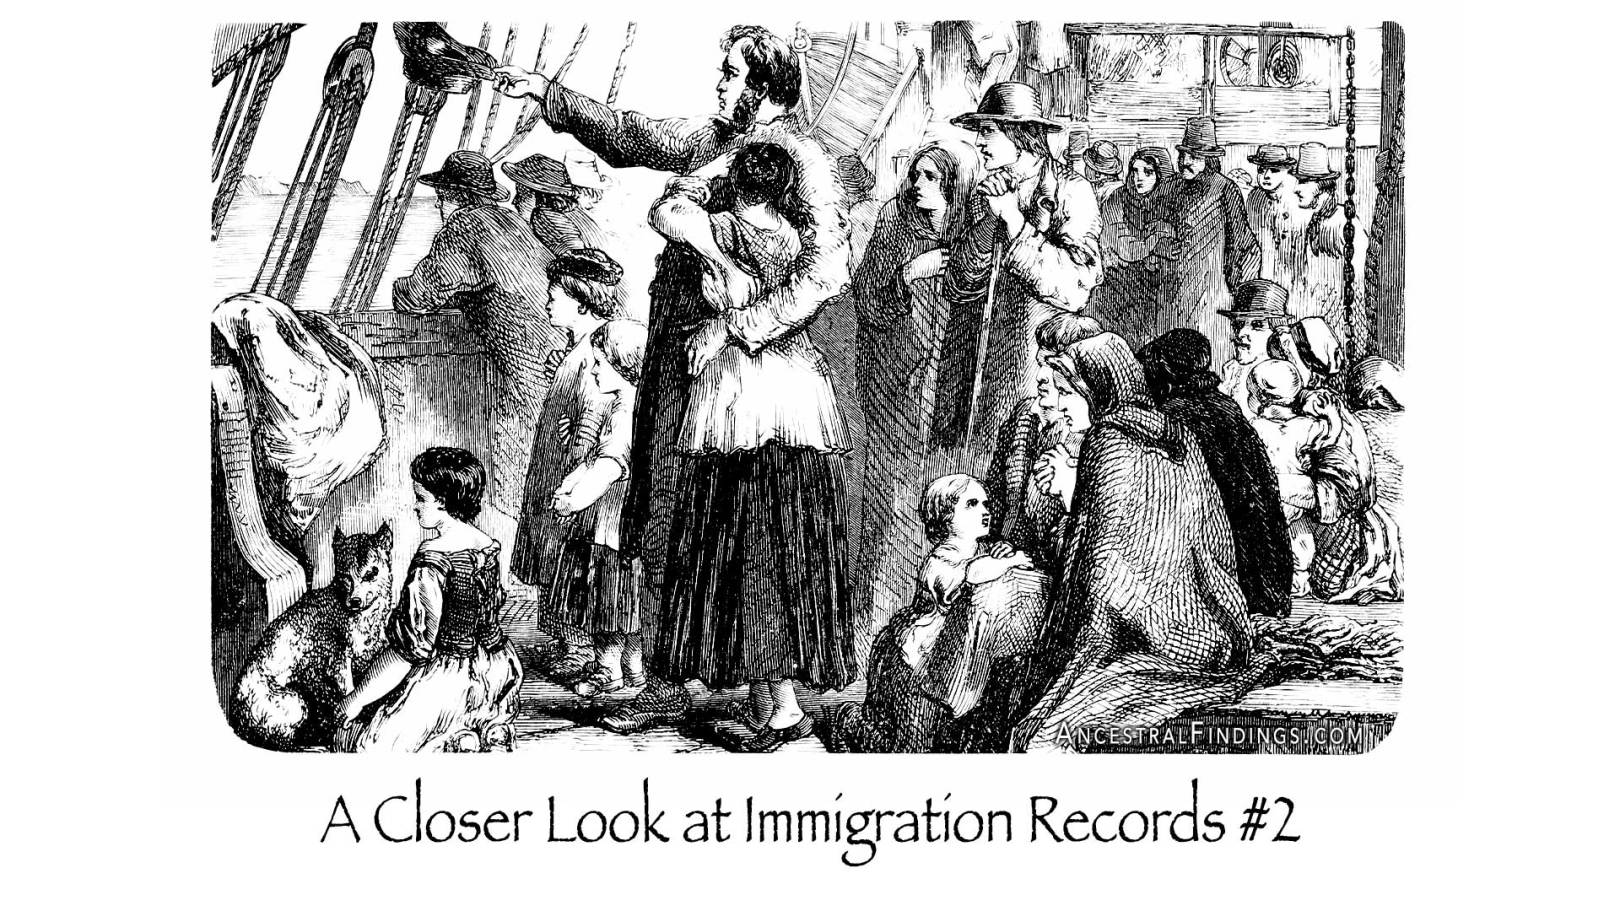 A Closer Look at Immigration Records #2